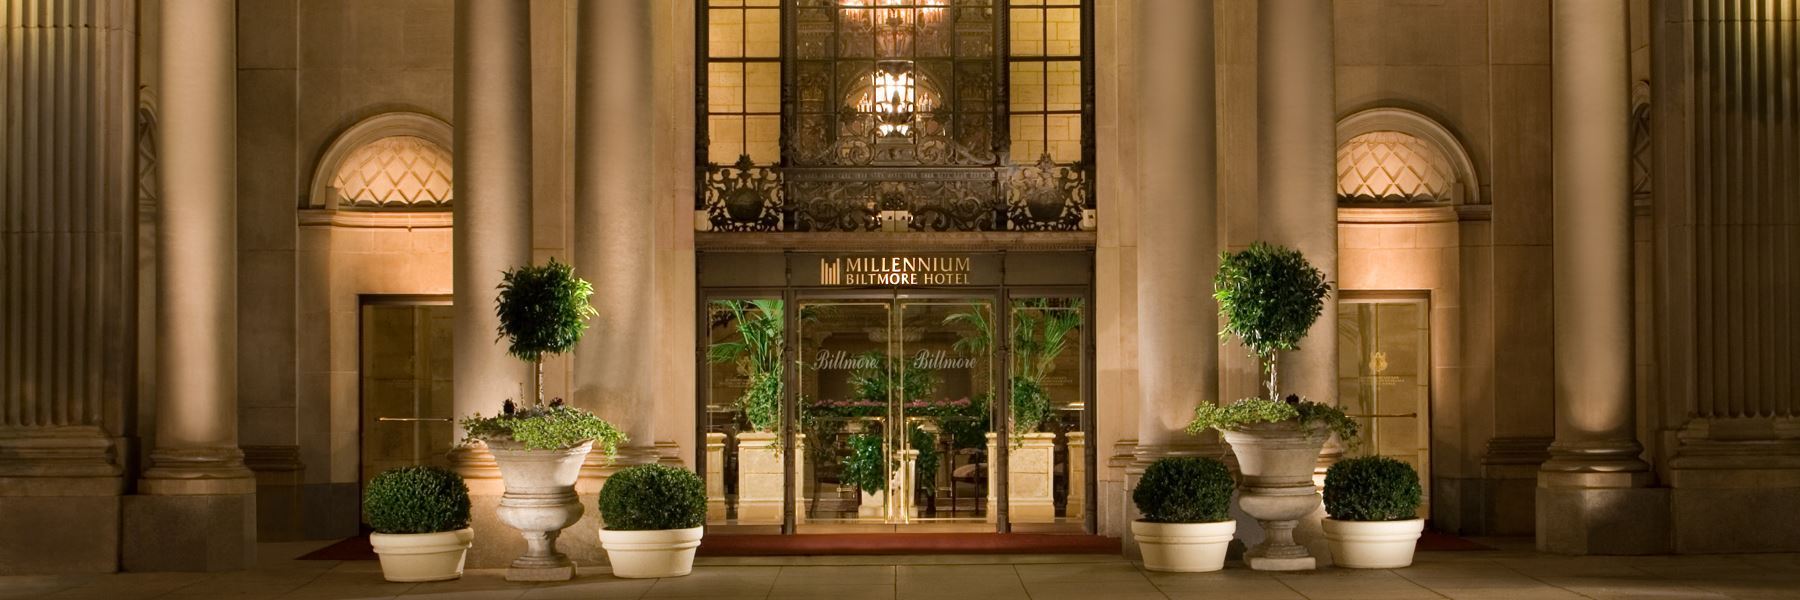 Millennium Biltmore Hotel Los Angeles